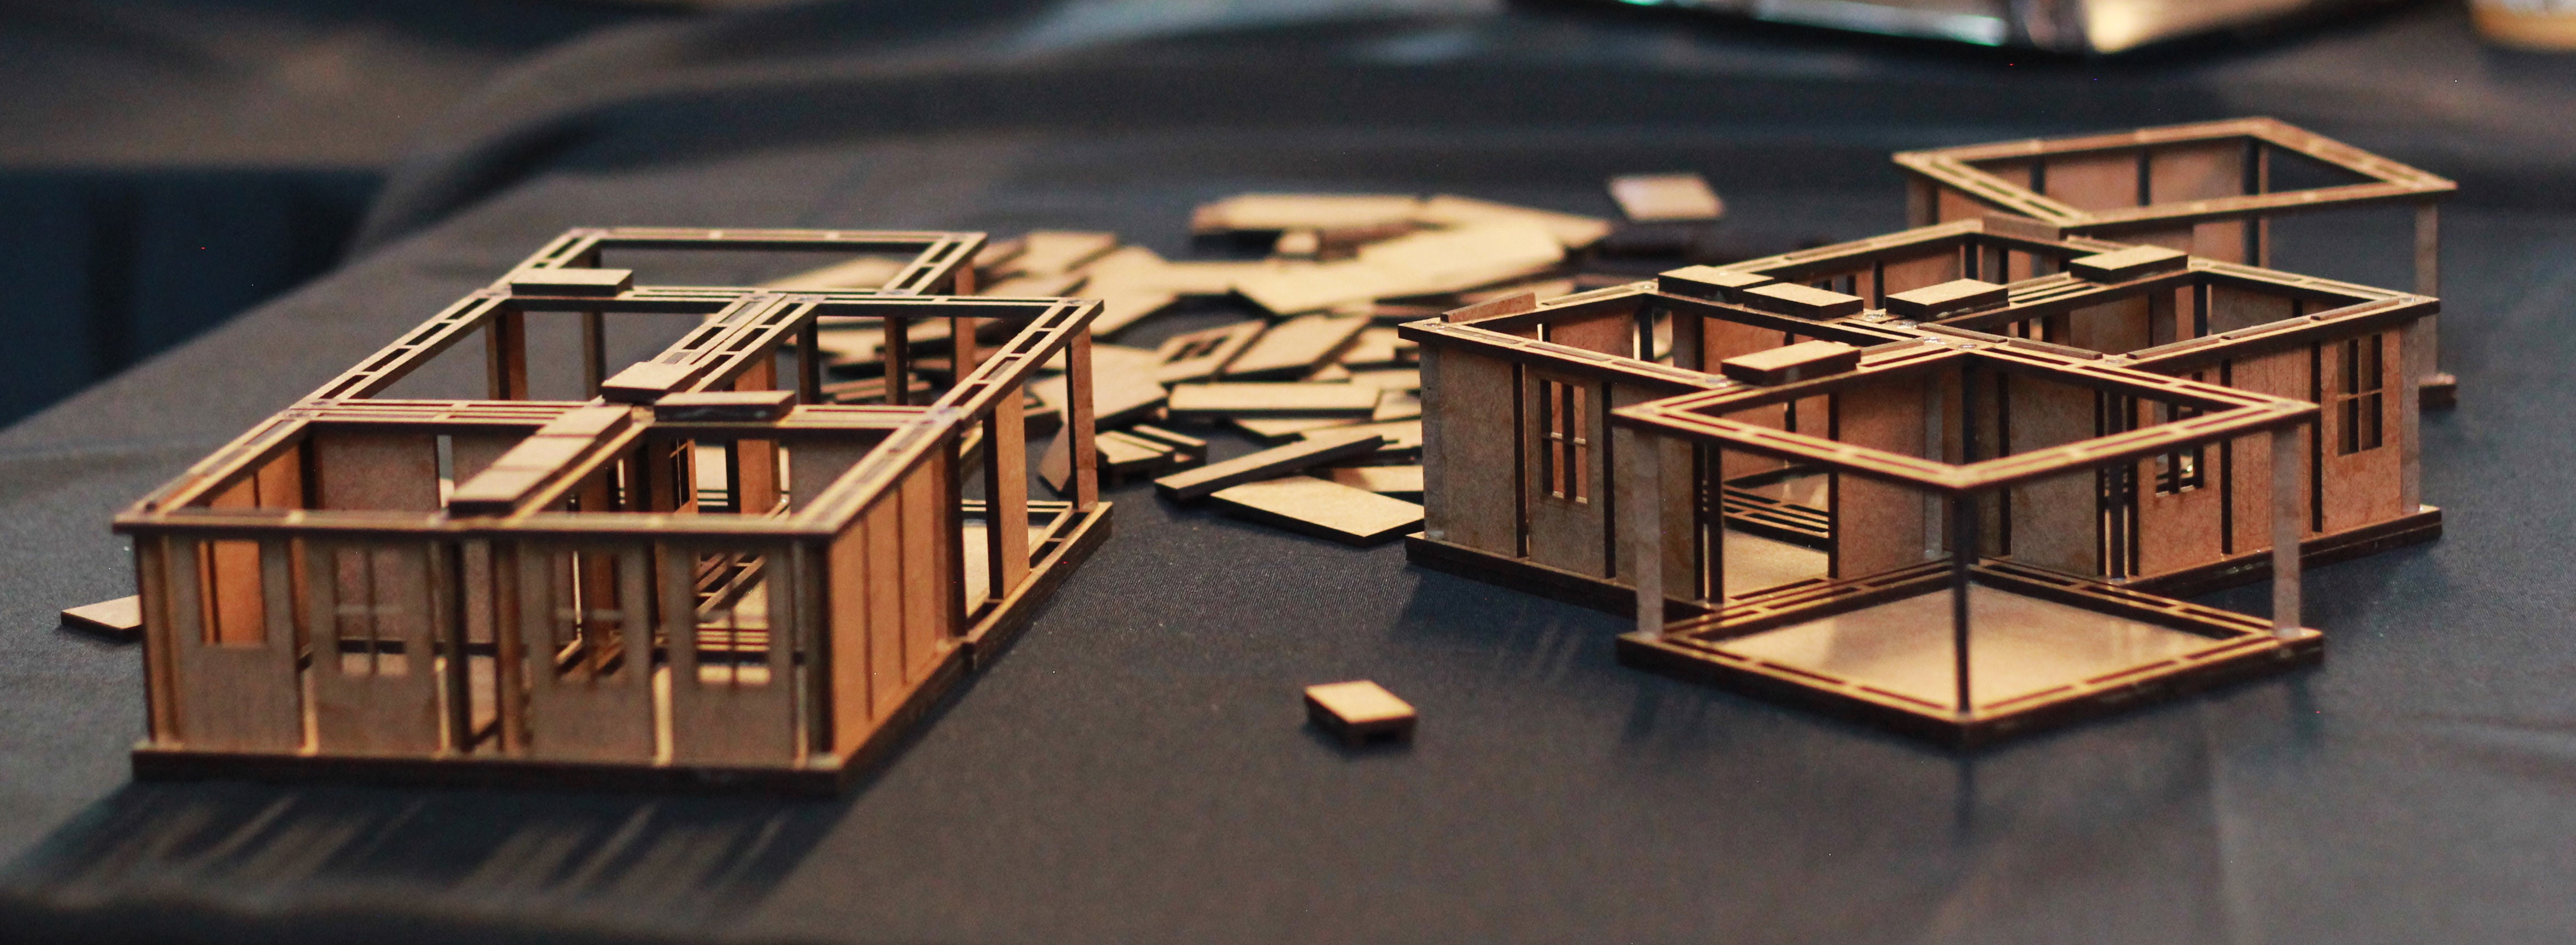 Miniature model of proposed Indigenous modular housing.